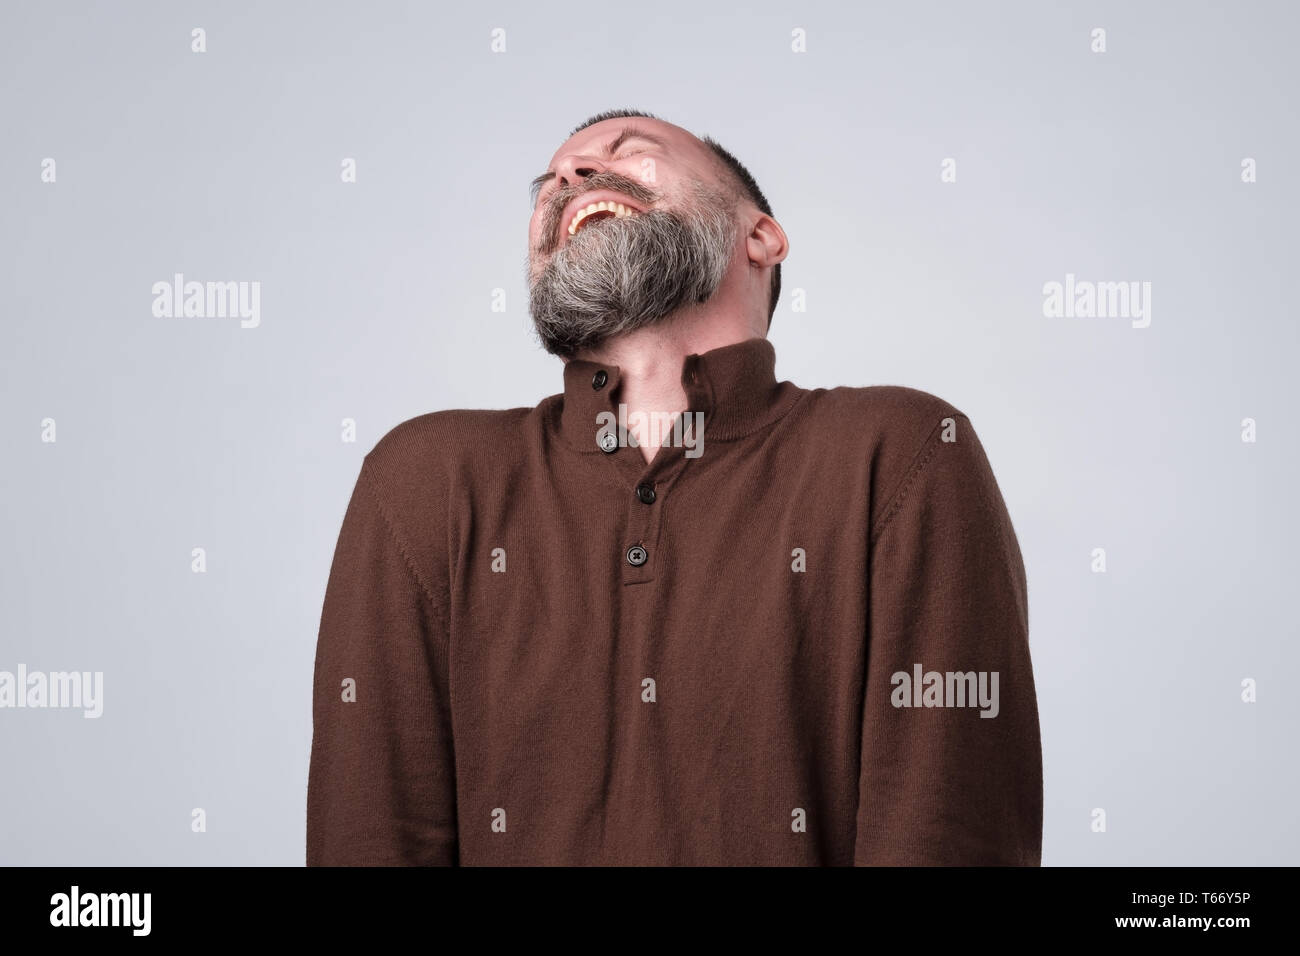 Caucasian mature man laughing on funny joke. Stock Photo